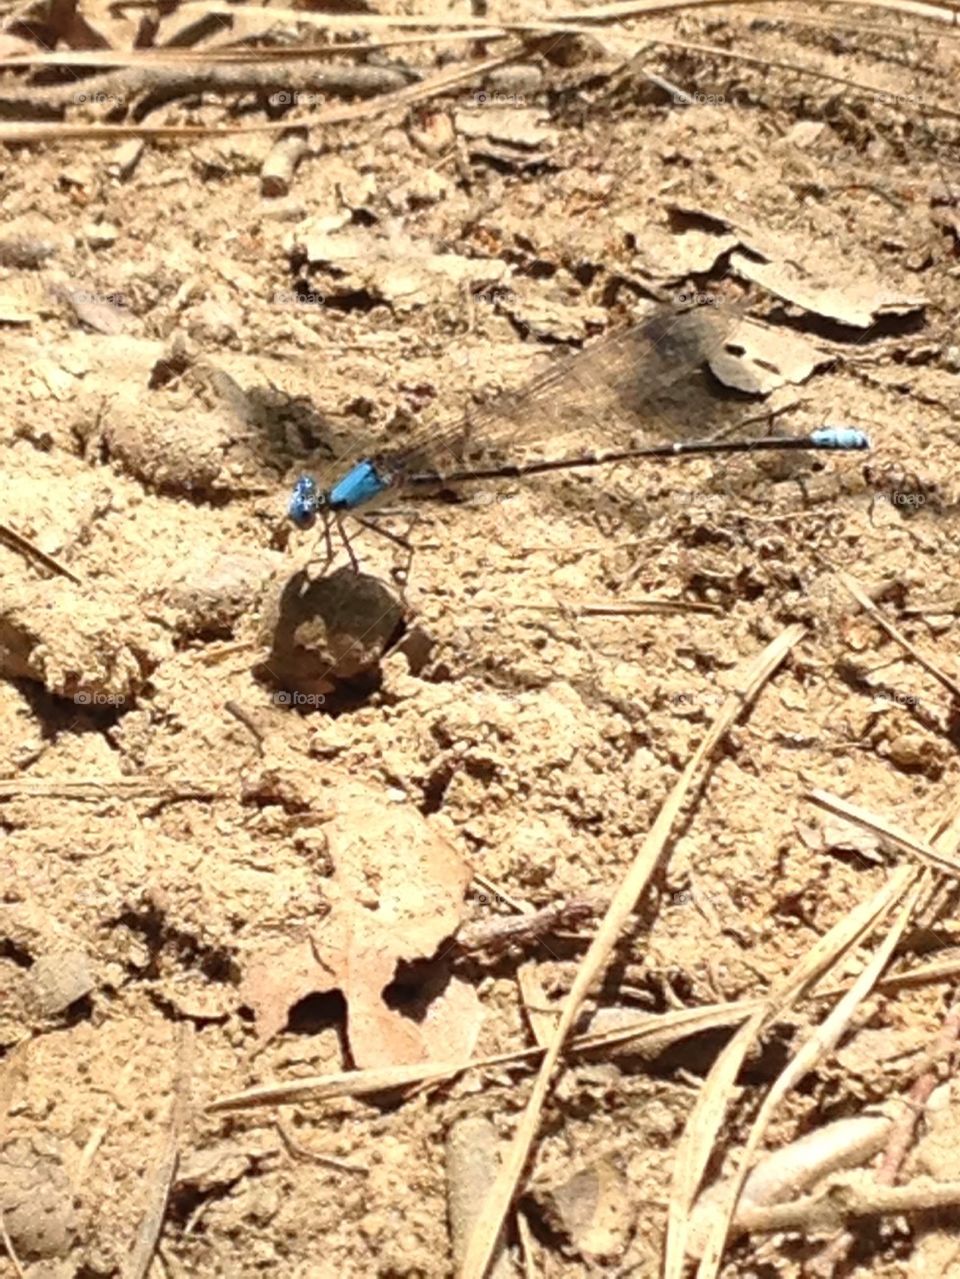 Blue, blue dragonfly